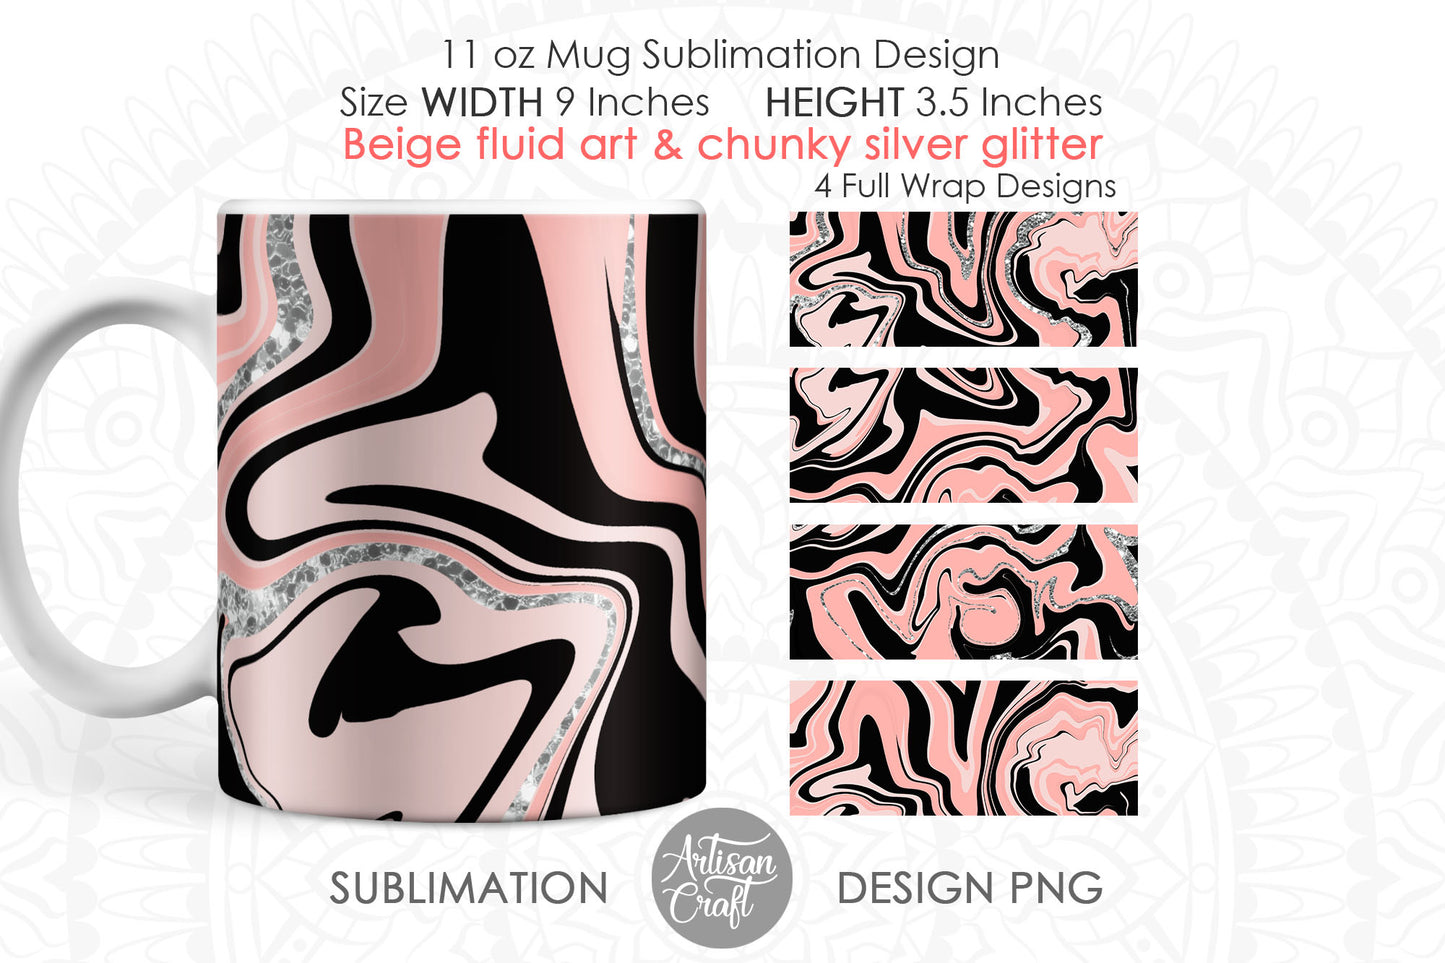 Beige fluid art 11oz mug template with silver glitter